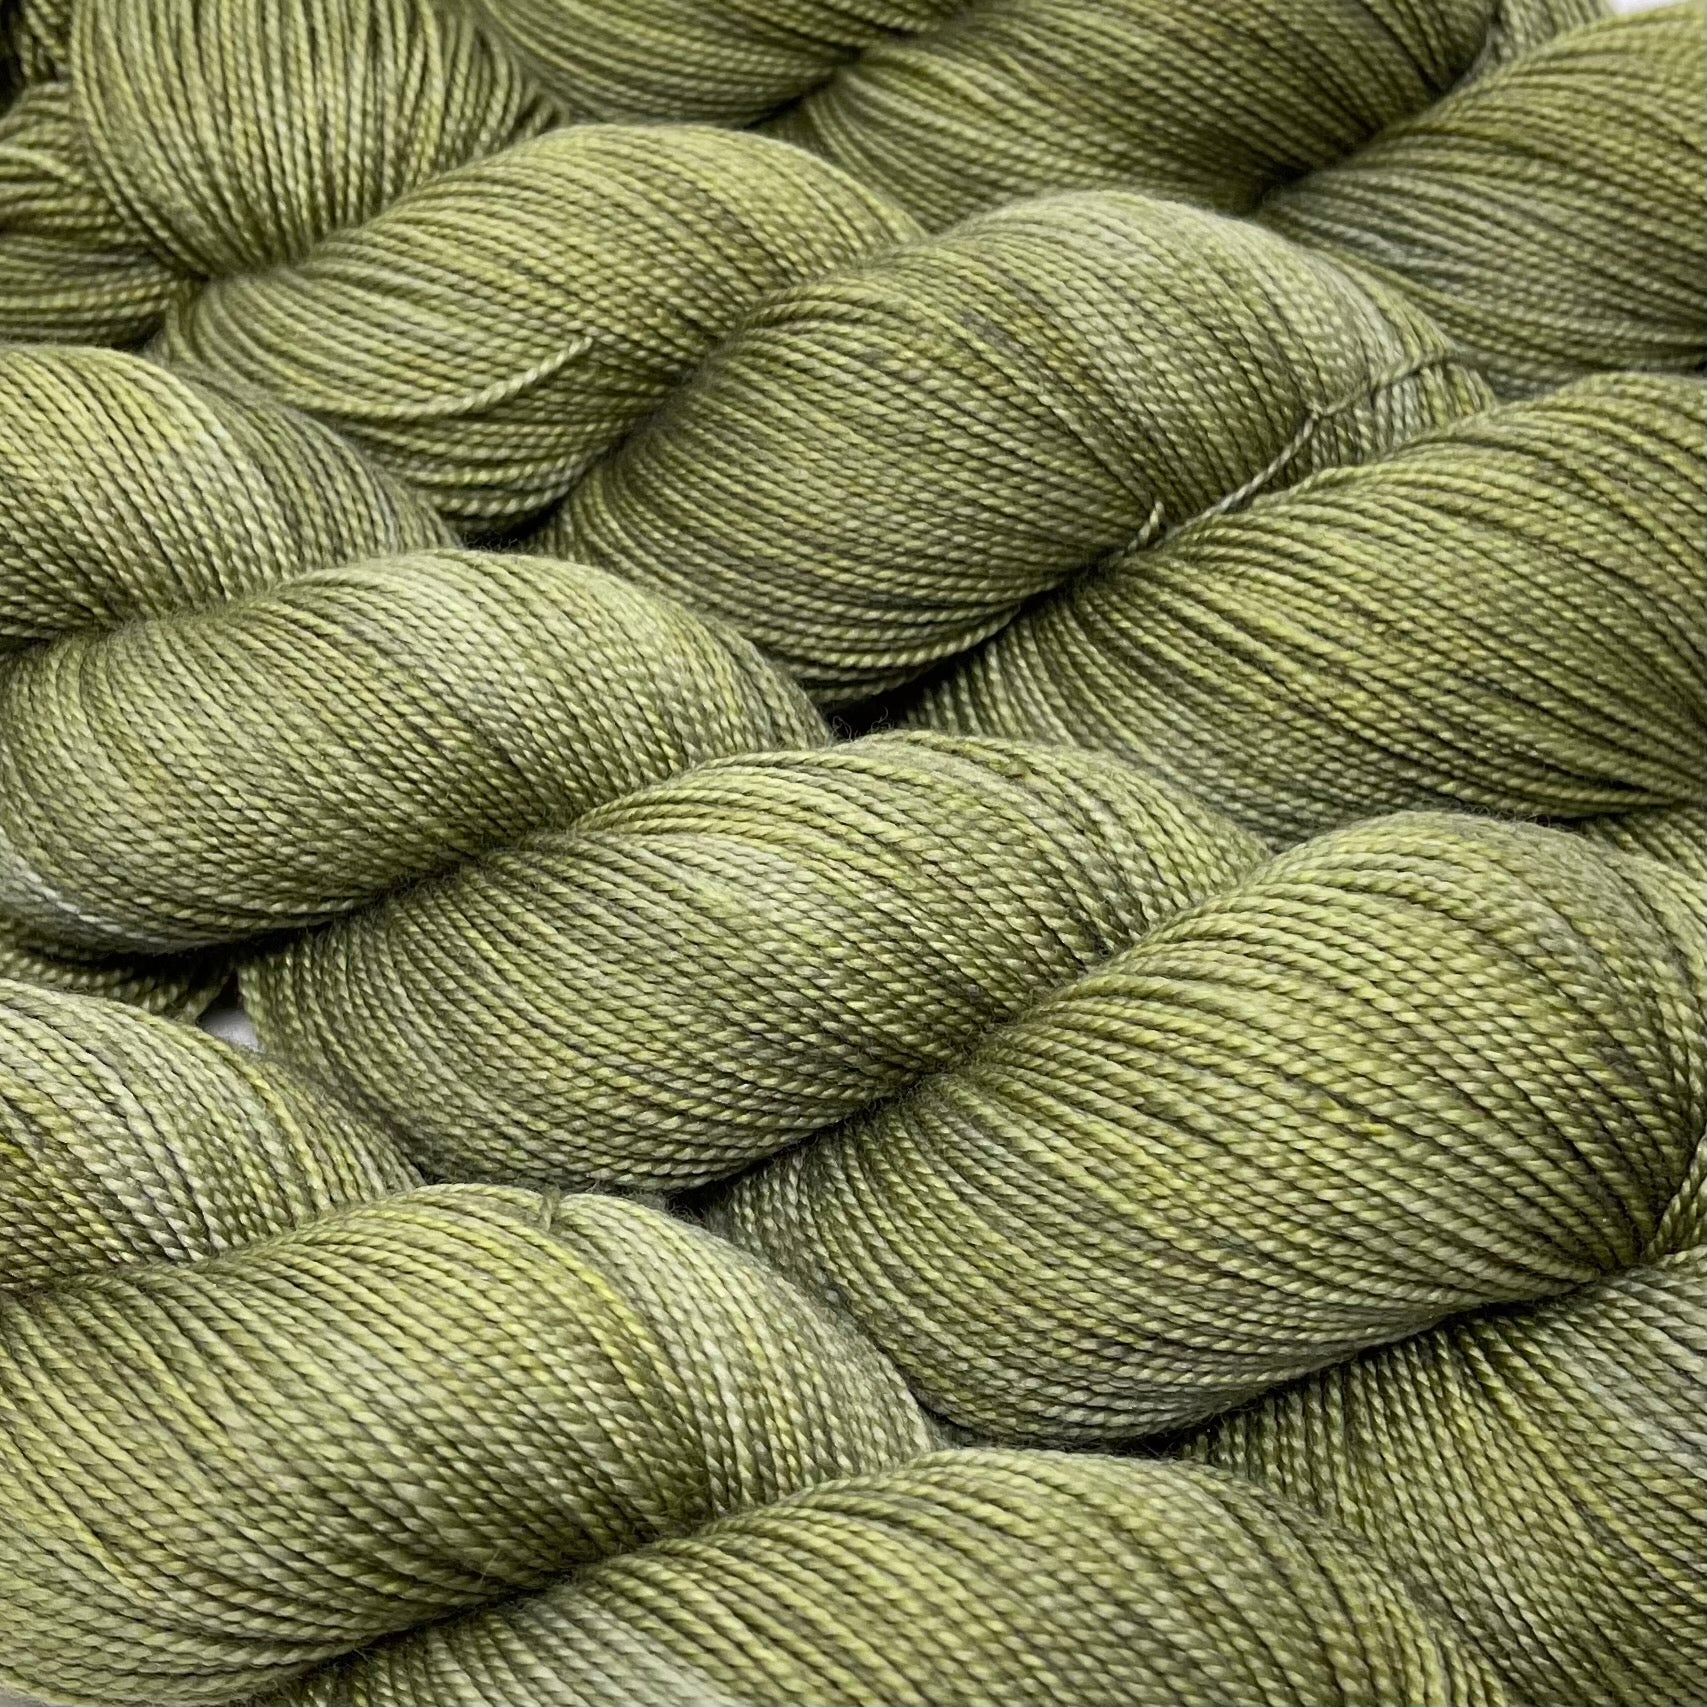 15 of the best merino wool yarns - Gathered